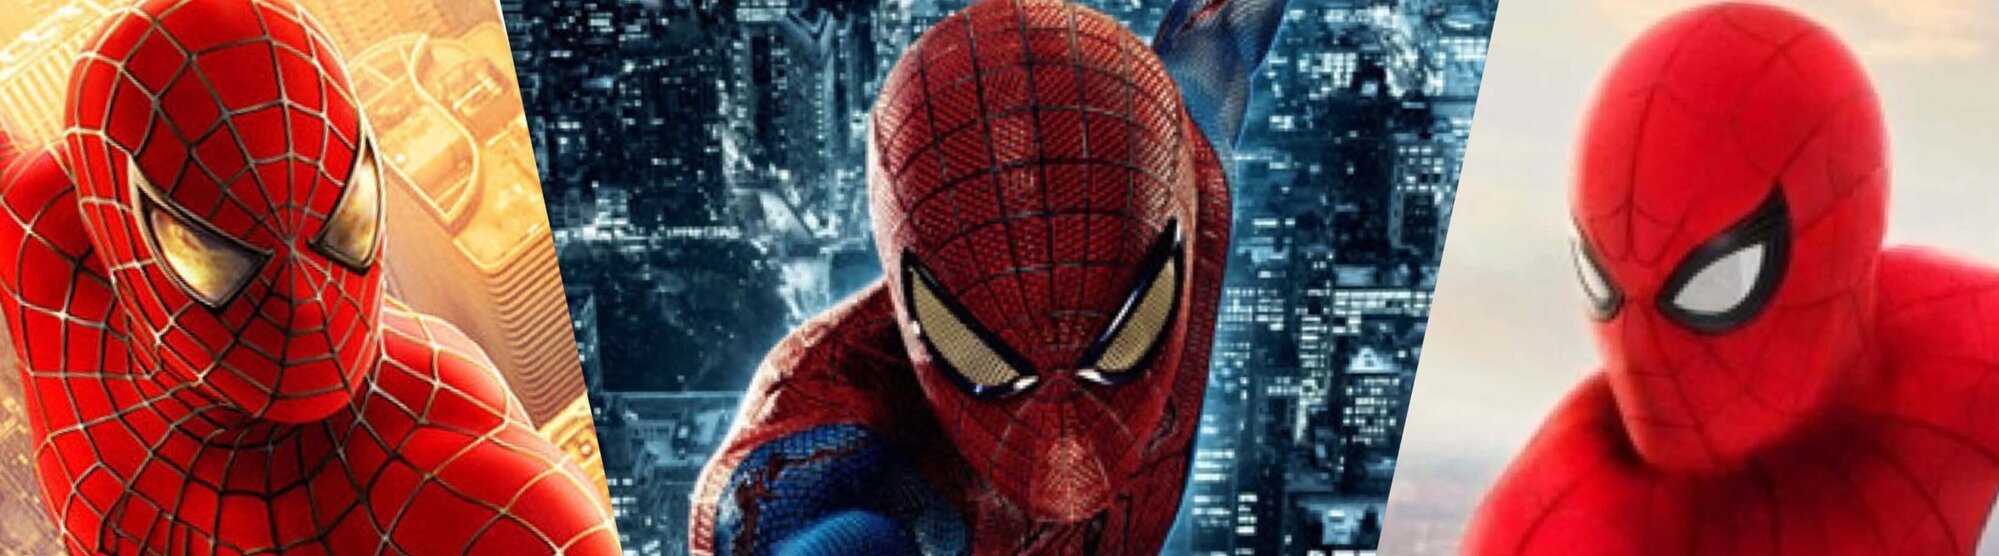 Spiderman No Way Home's background image'